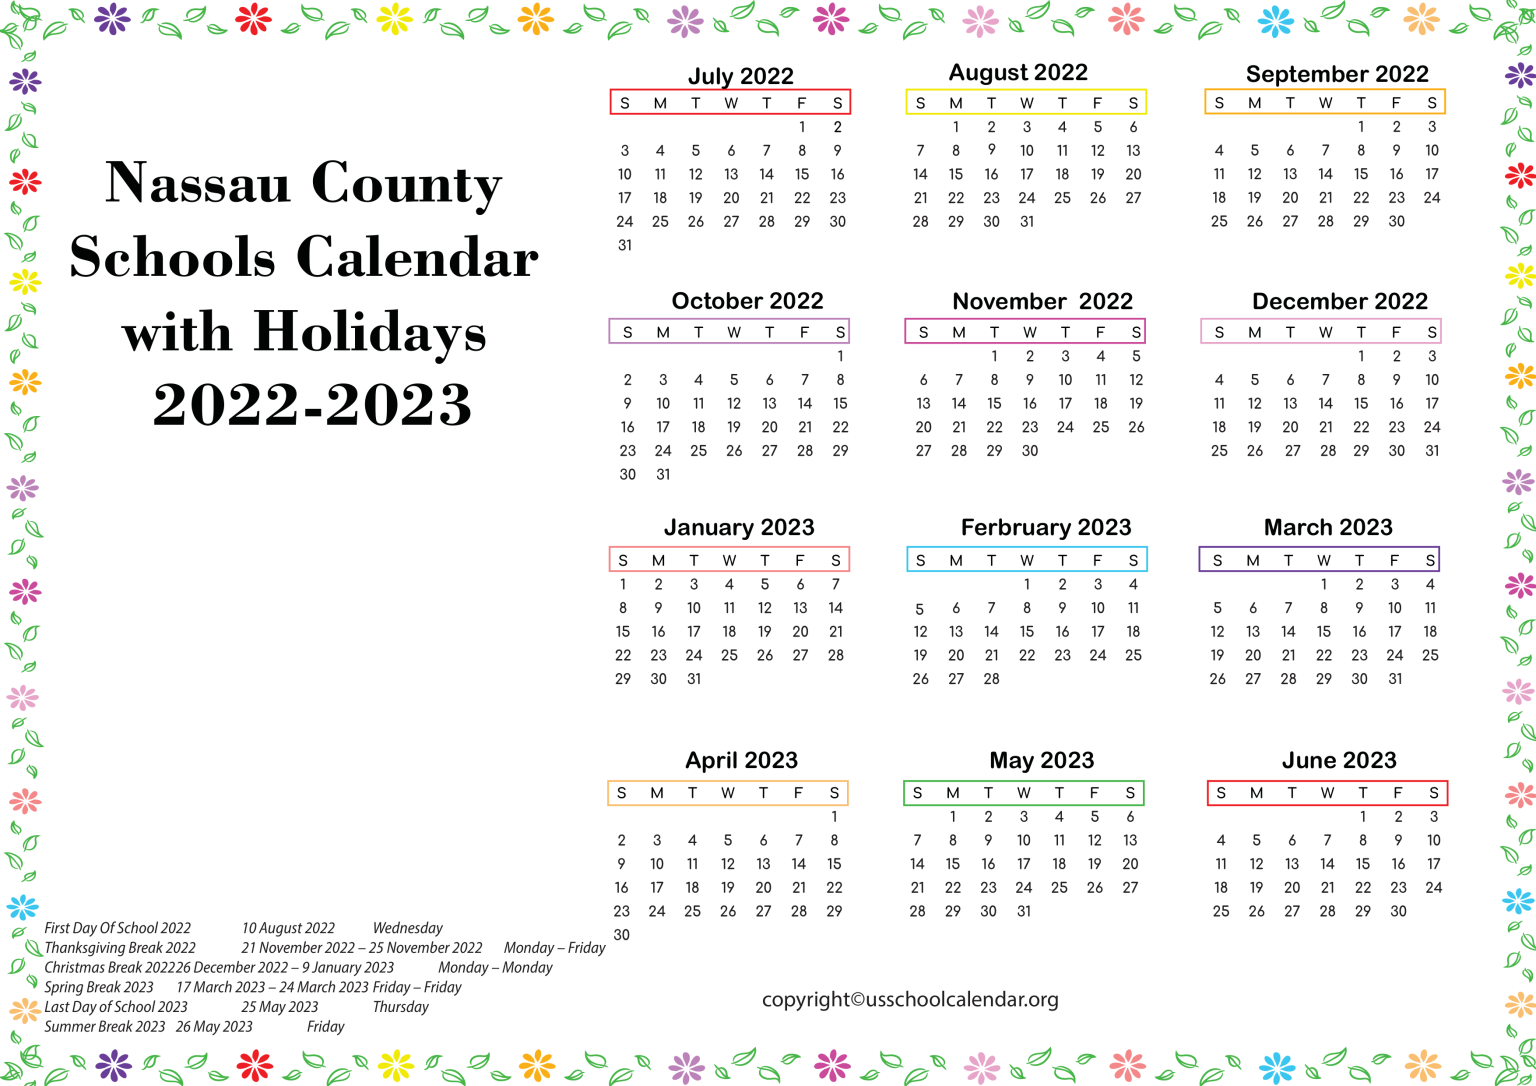 Nassau County Schools Calendar with Holidays 20222023